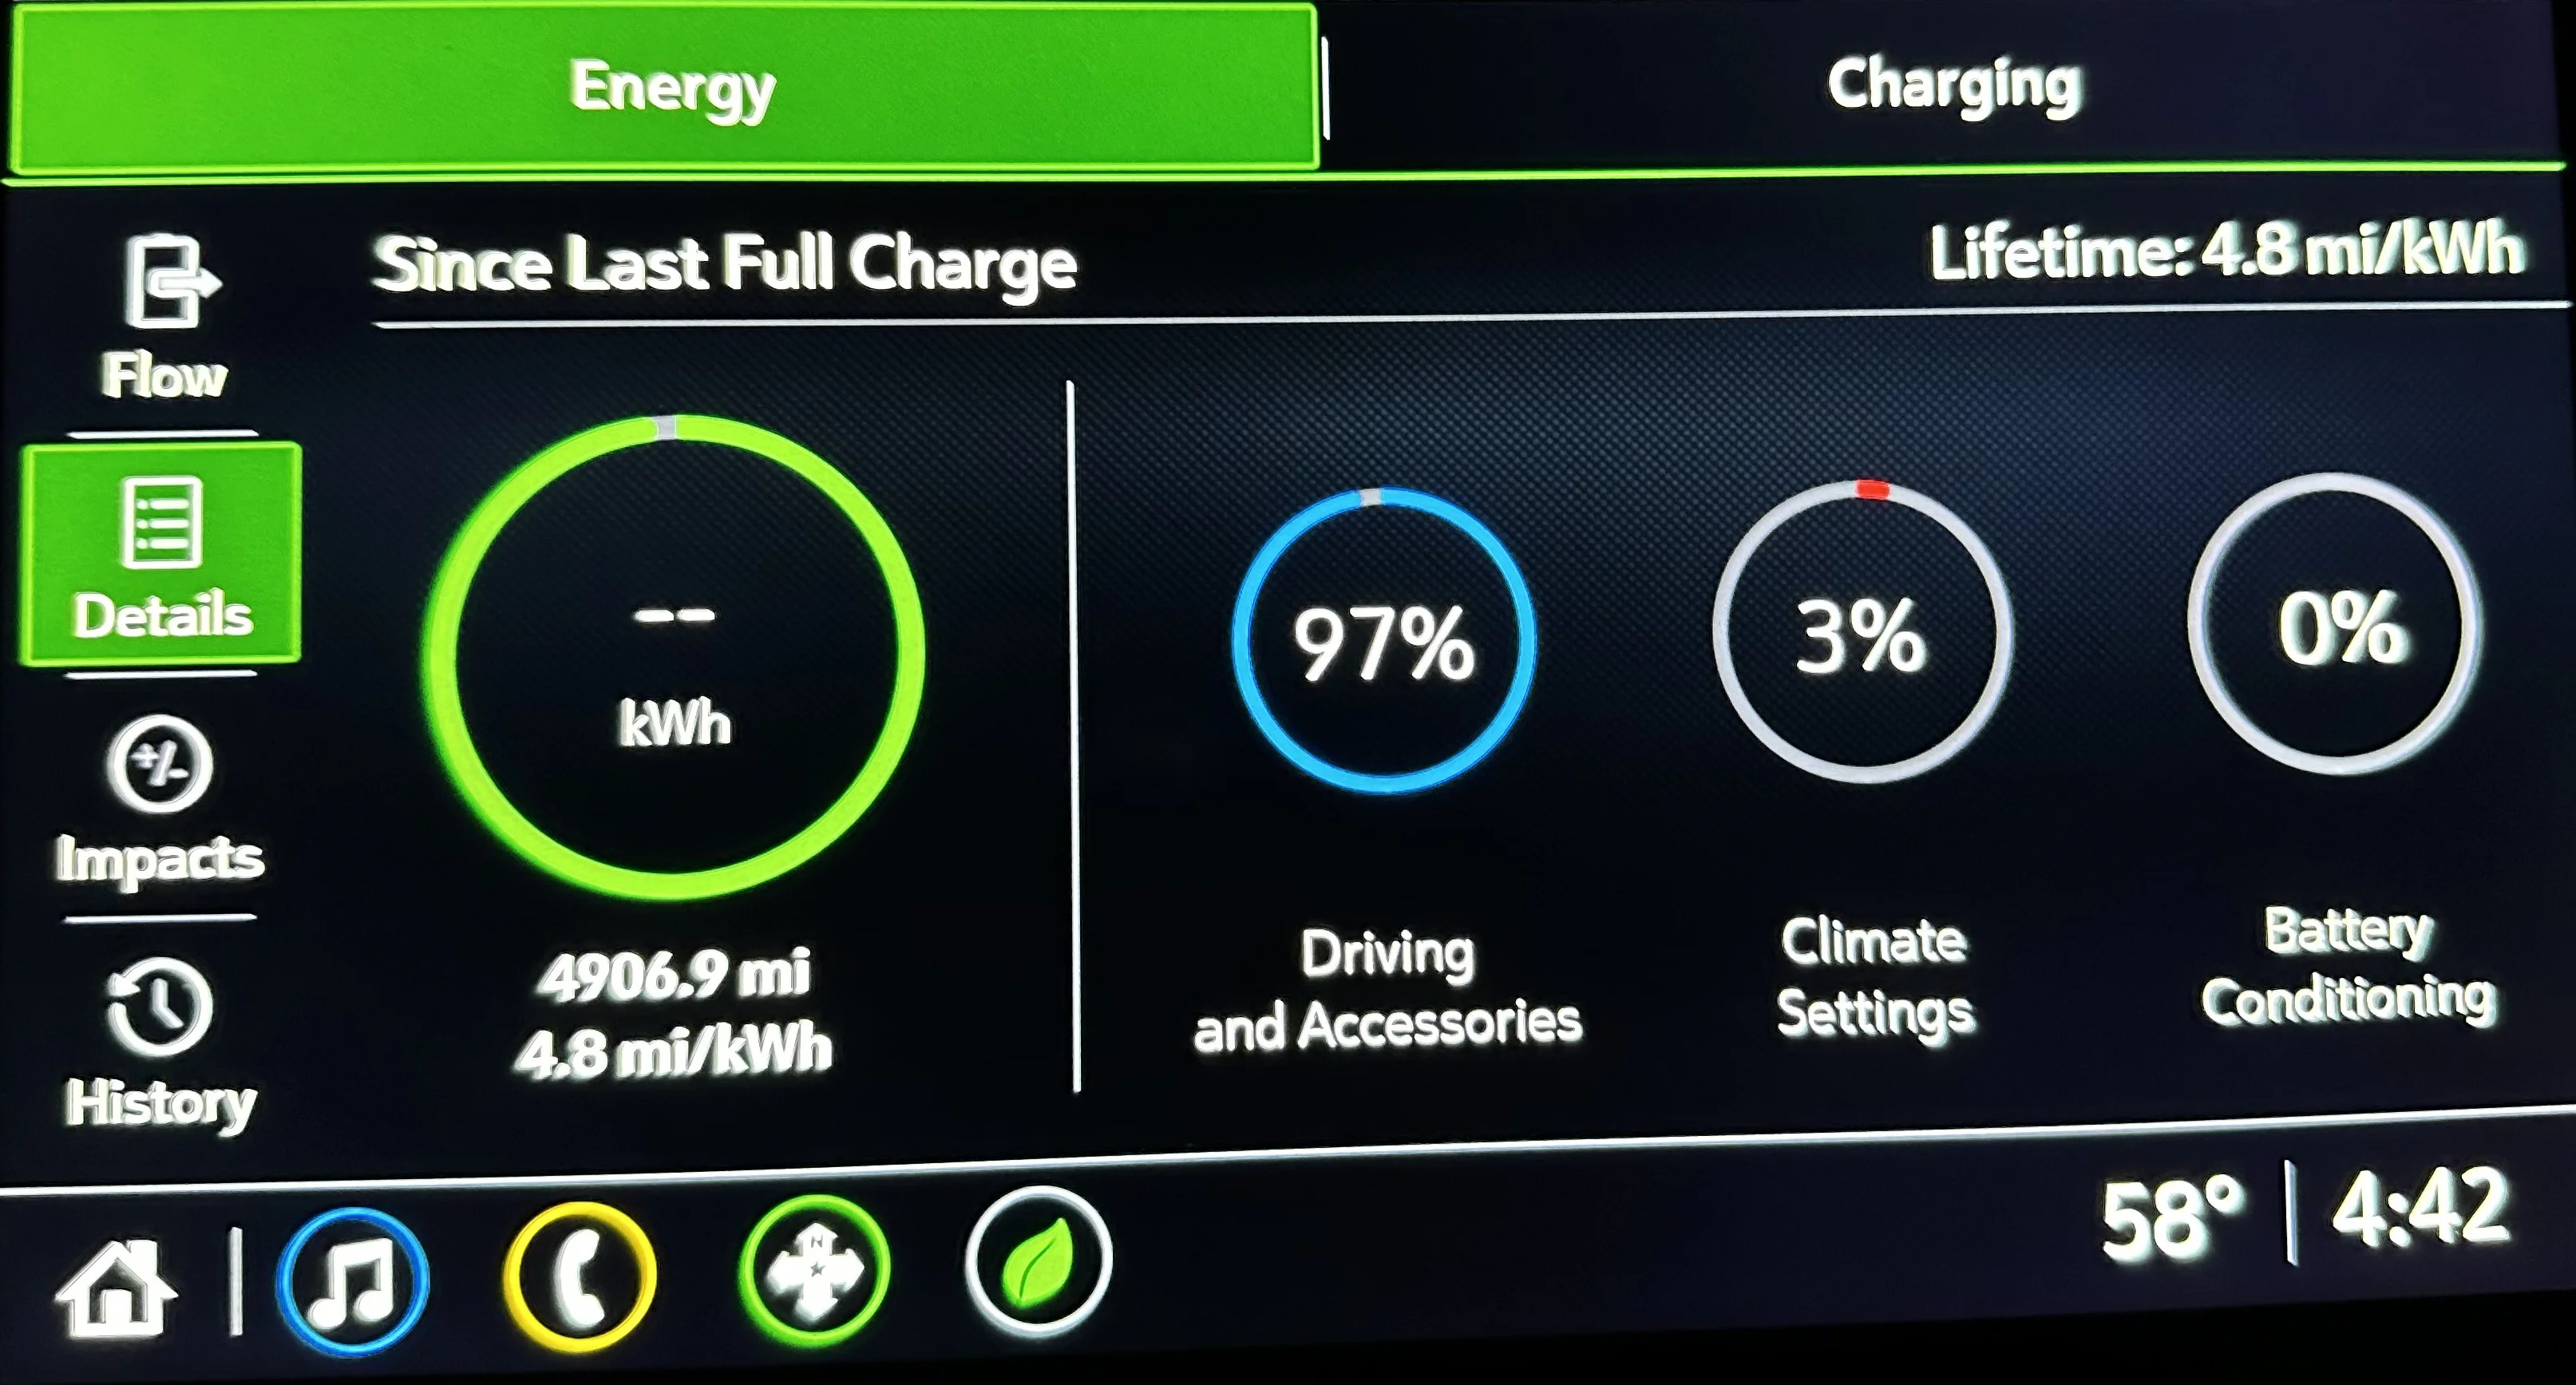 Energy usage screen on a Bolt EV